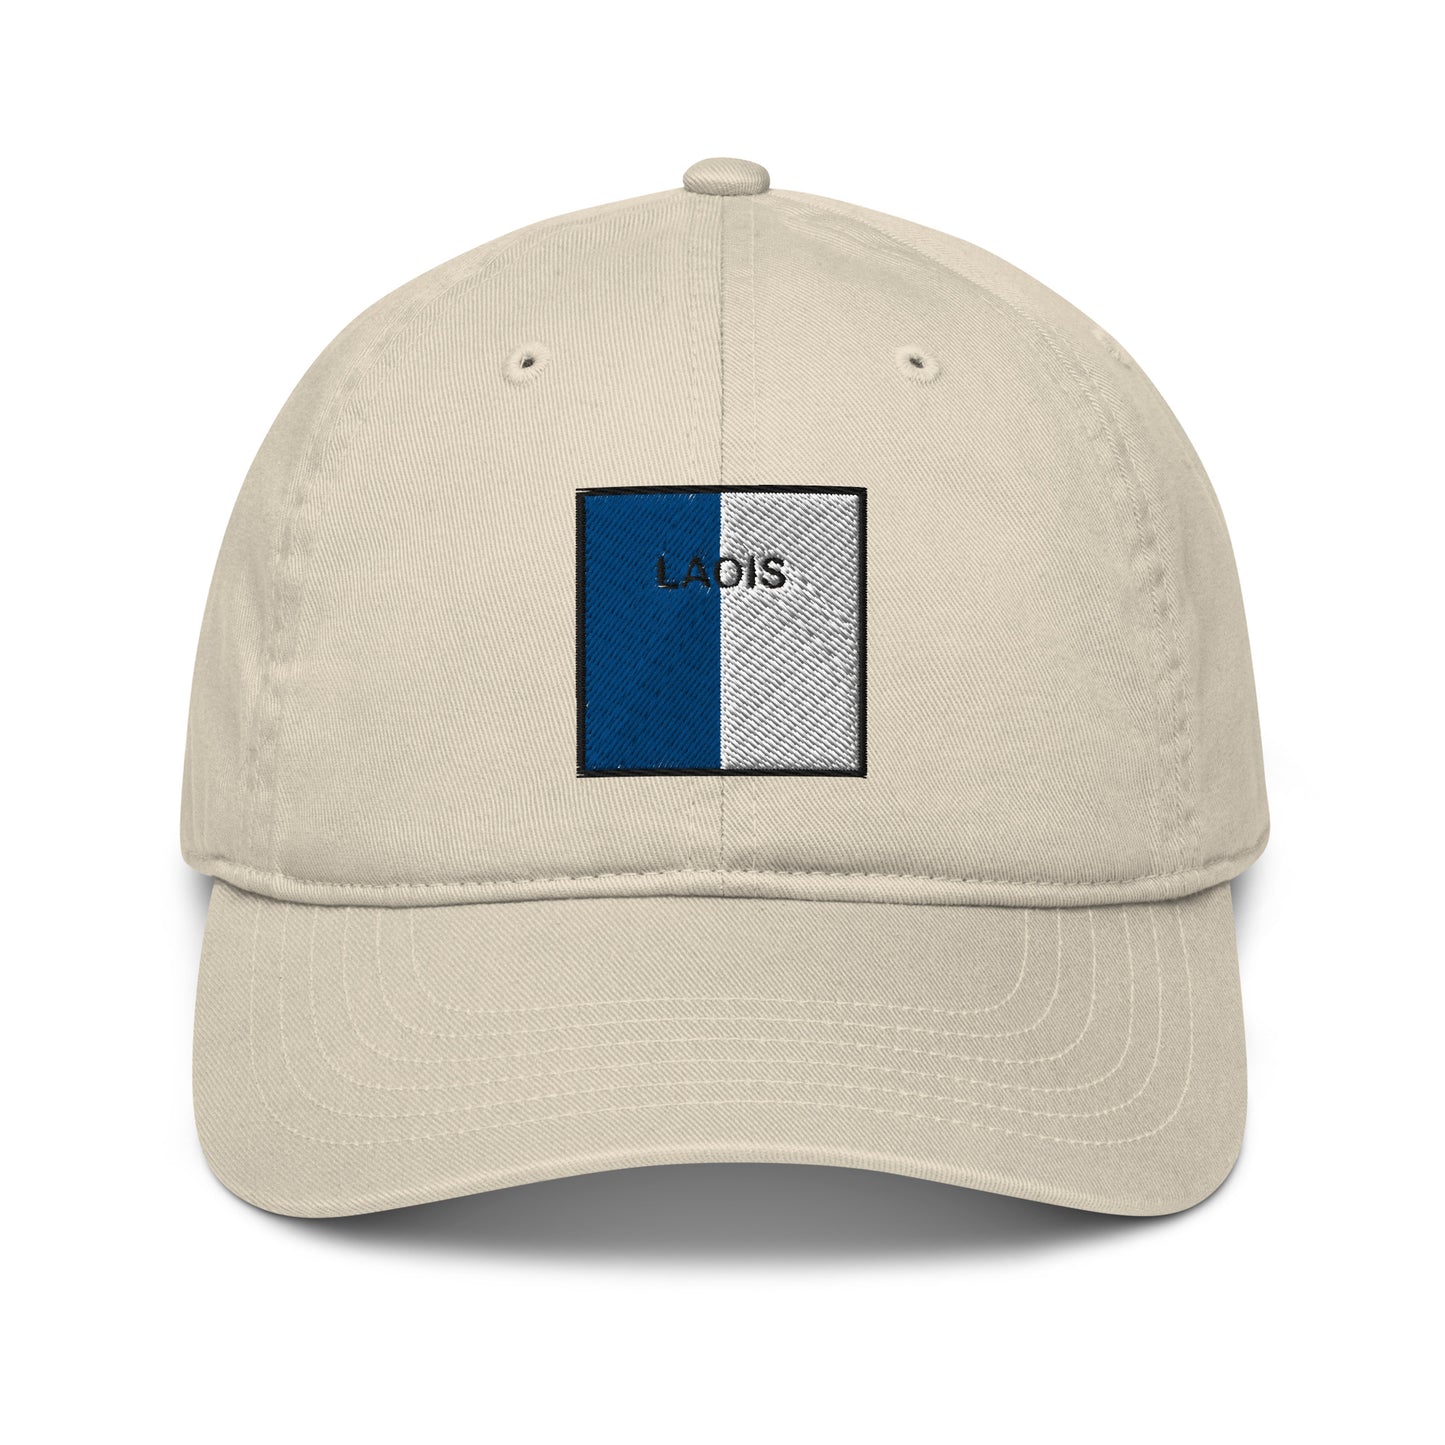 Embroidered Laois Baseball Hat - 100% organic cotton